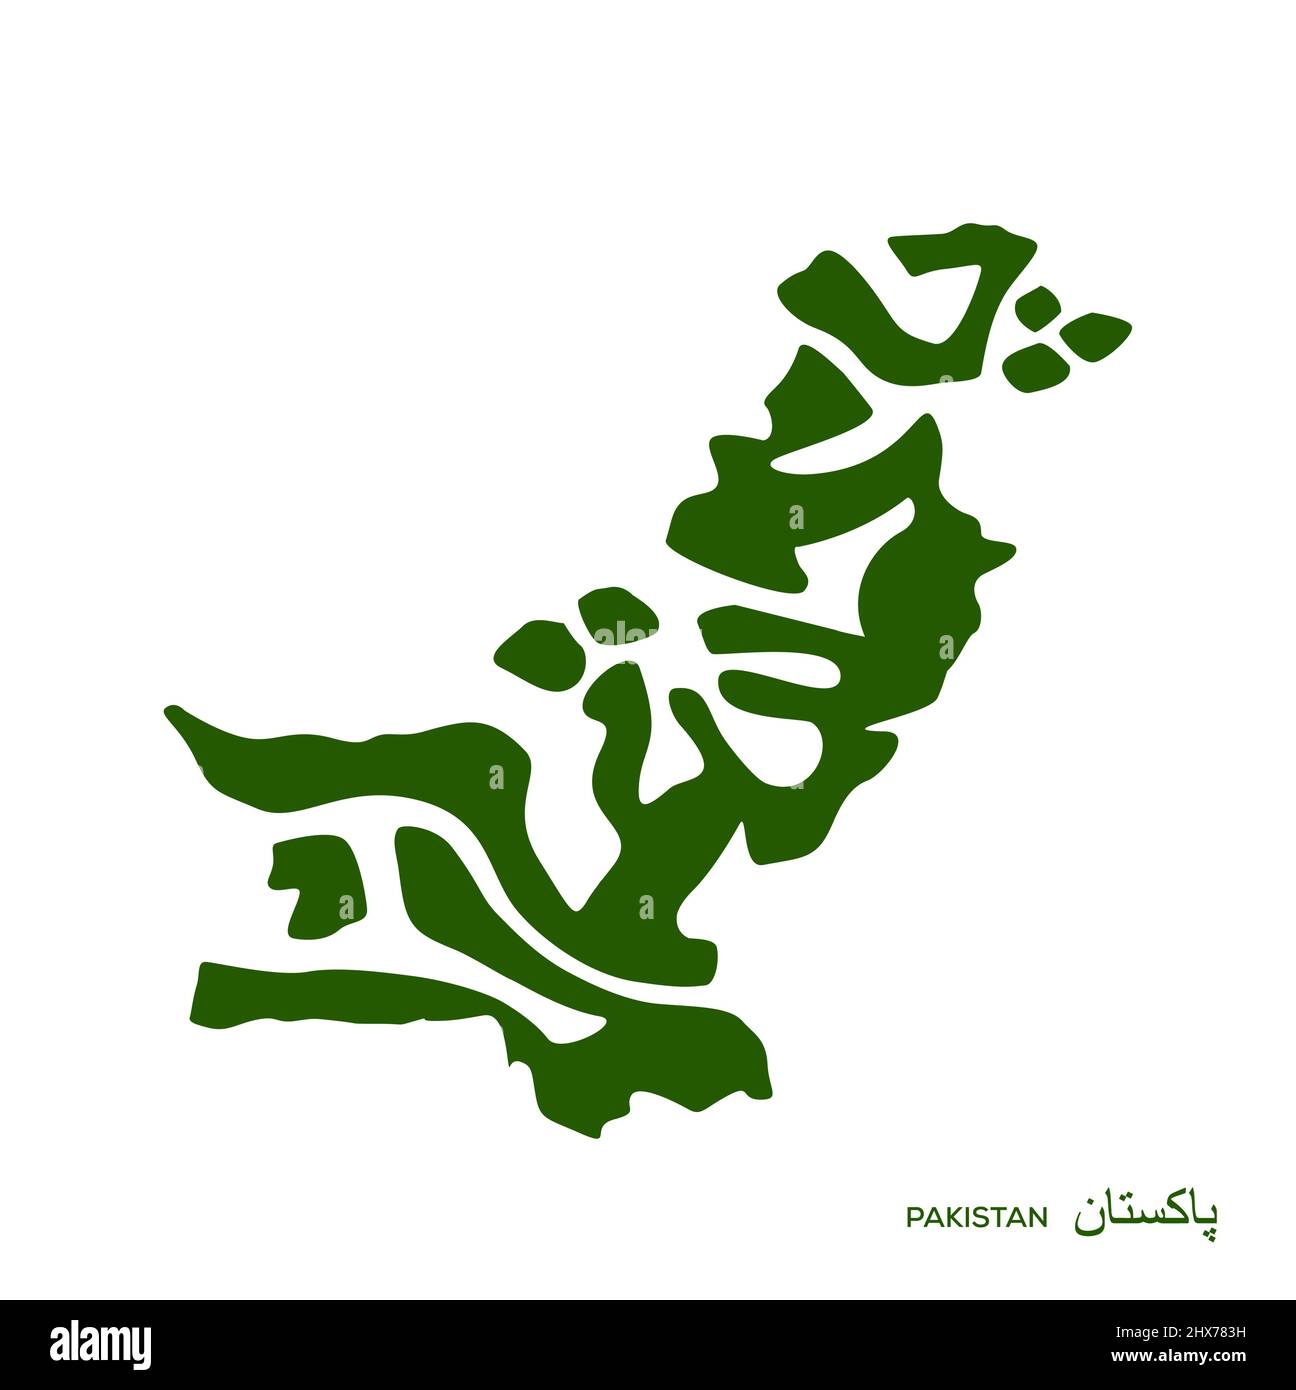 Pakistanischer Kartenschriftzug mit Urdu-Schriftzug. Pakistans Karte Typografie. Stock Vektor